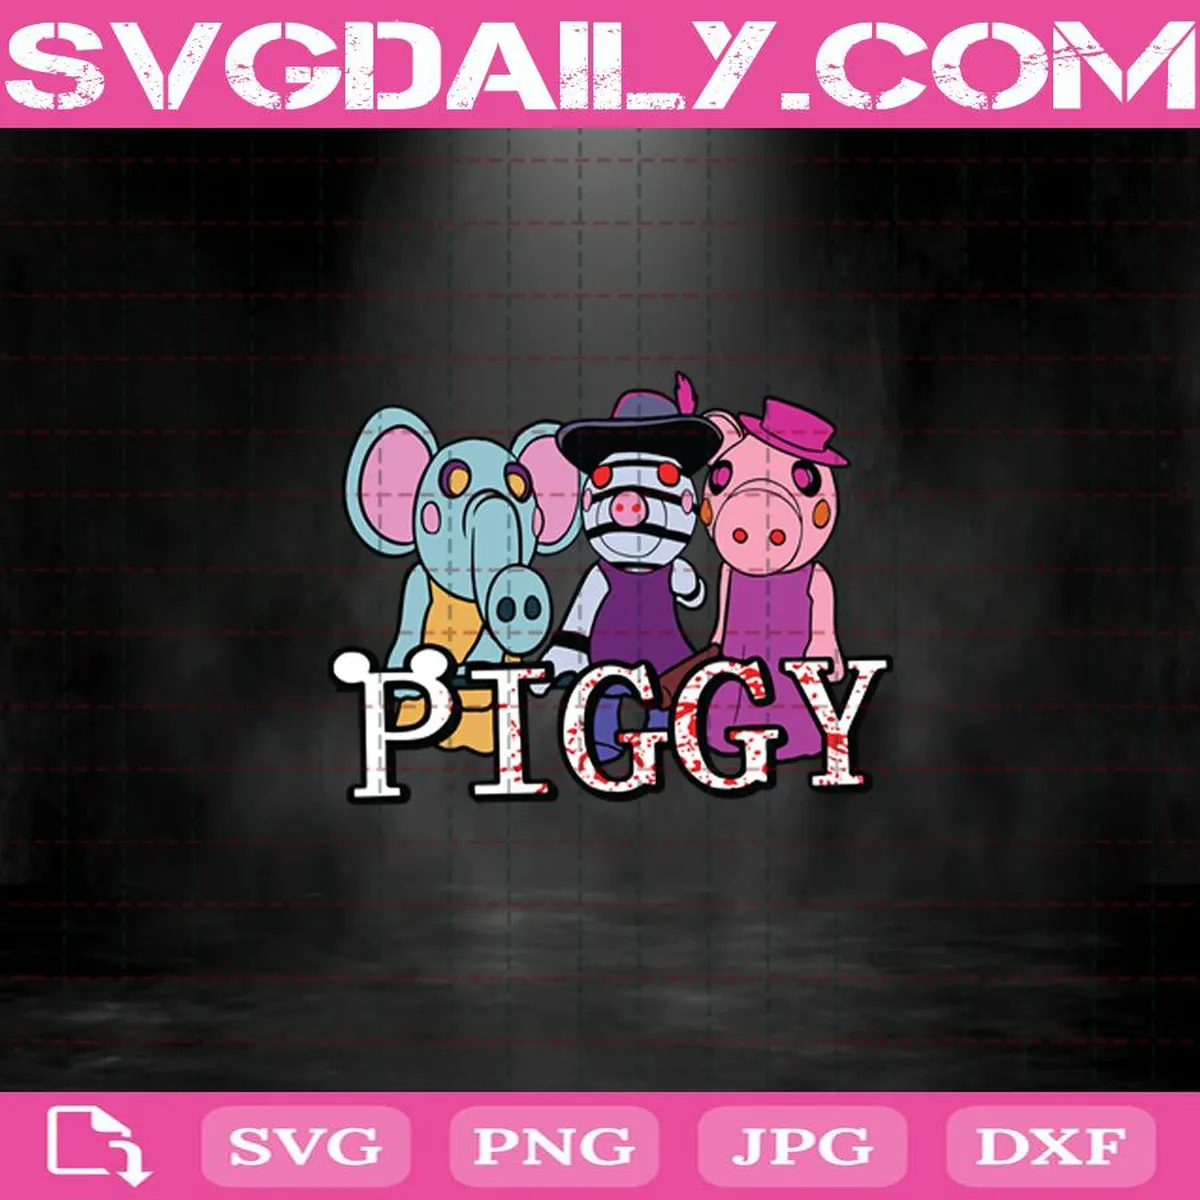 Piggy Bosses Svg, Piggy Roblox Svg, Piggy Svg, Piggy Horror Roblox Svg, Roblox Game Svg, Piggy Halloween Svg